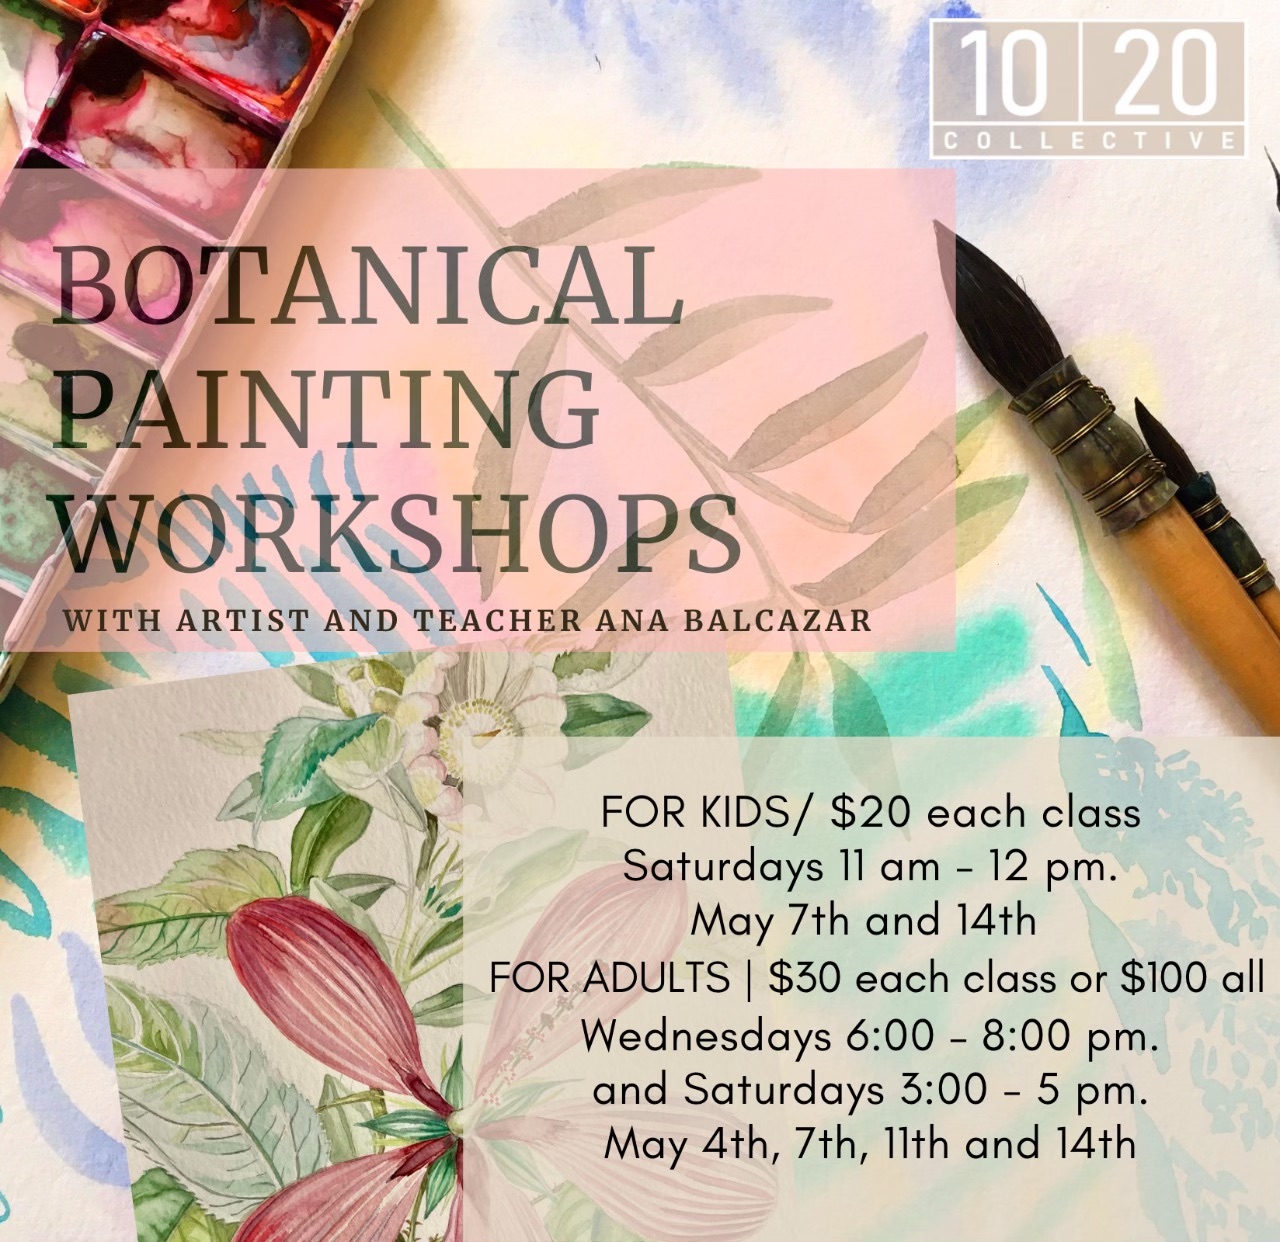 Adult Botanical Painting Workshop w/ Ana Balcazar - 1020 Collective